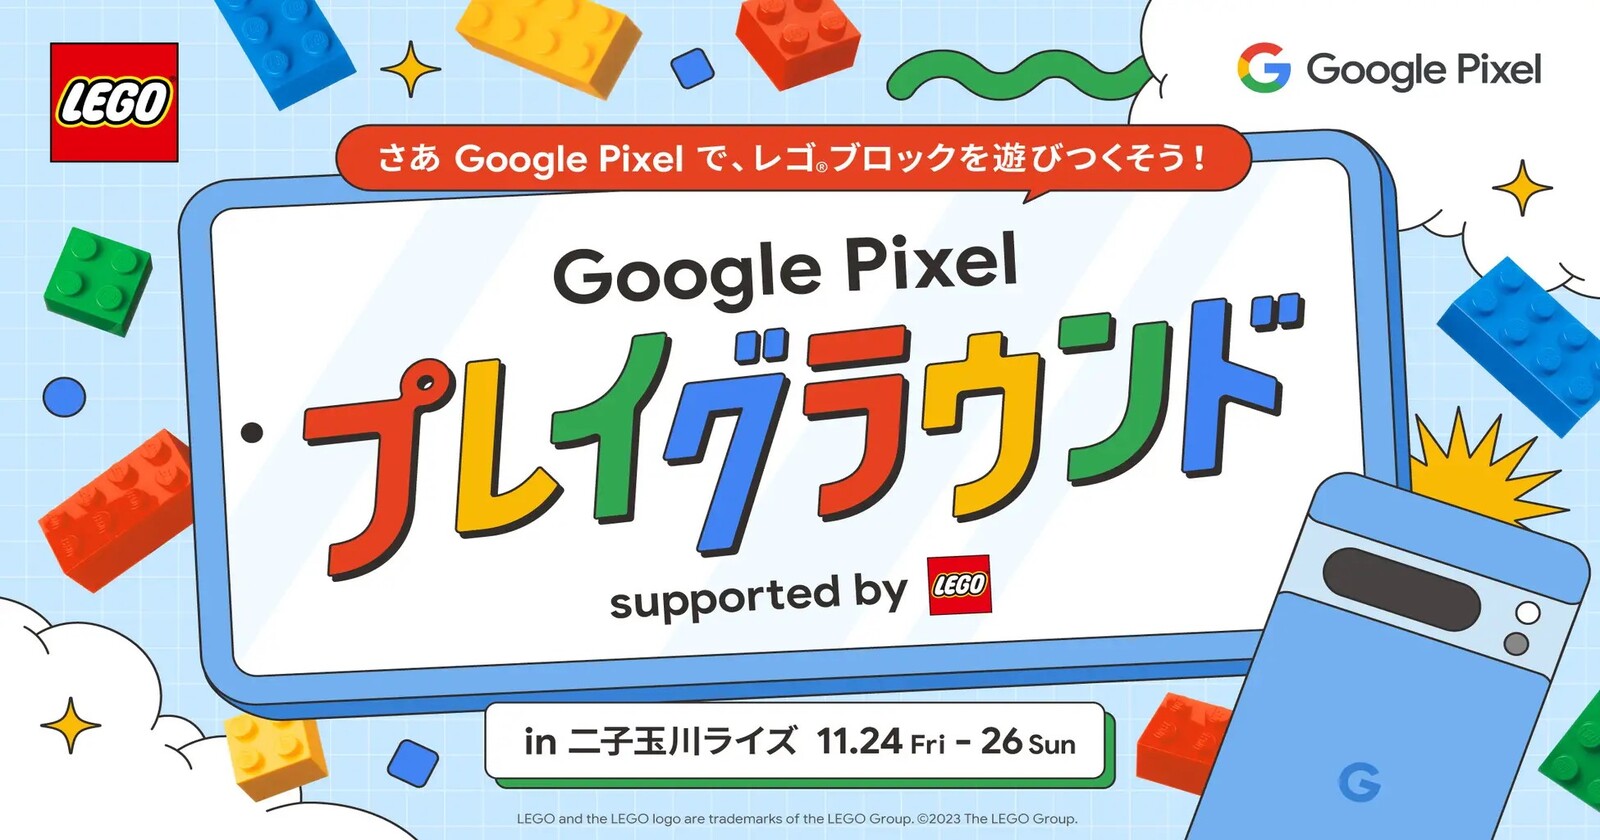 Google & LEGO Japan hosting 'Google Pixel Playground' Futakotamagawa event featuring the Pixel 8 duo